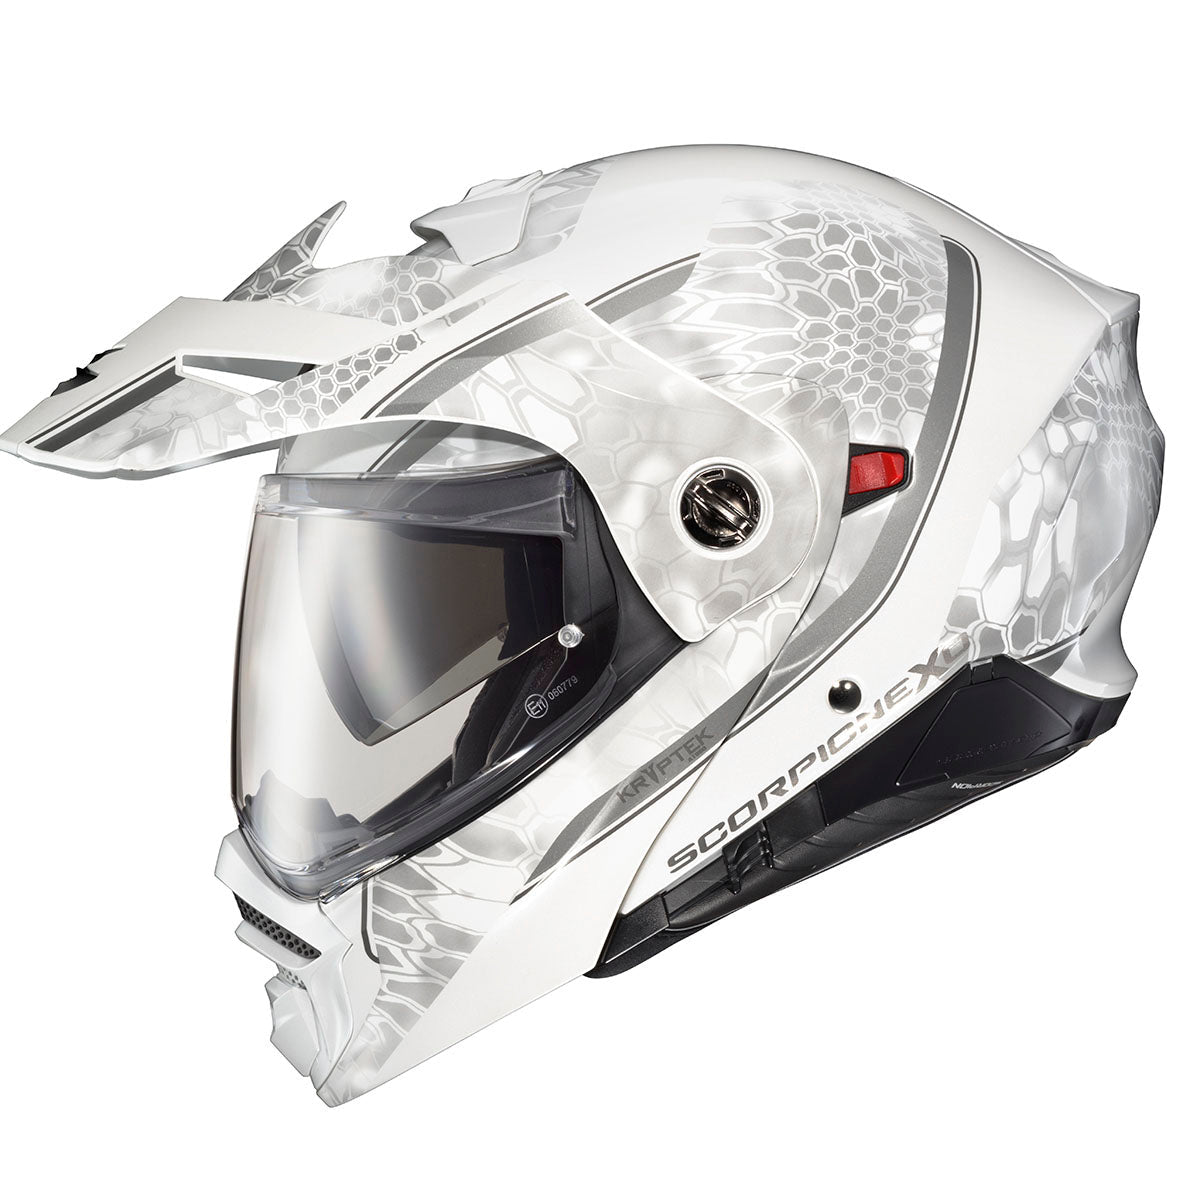 Scorpion EXO AT960 Modular Kryptek Helmet - Wraith